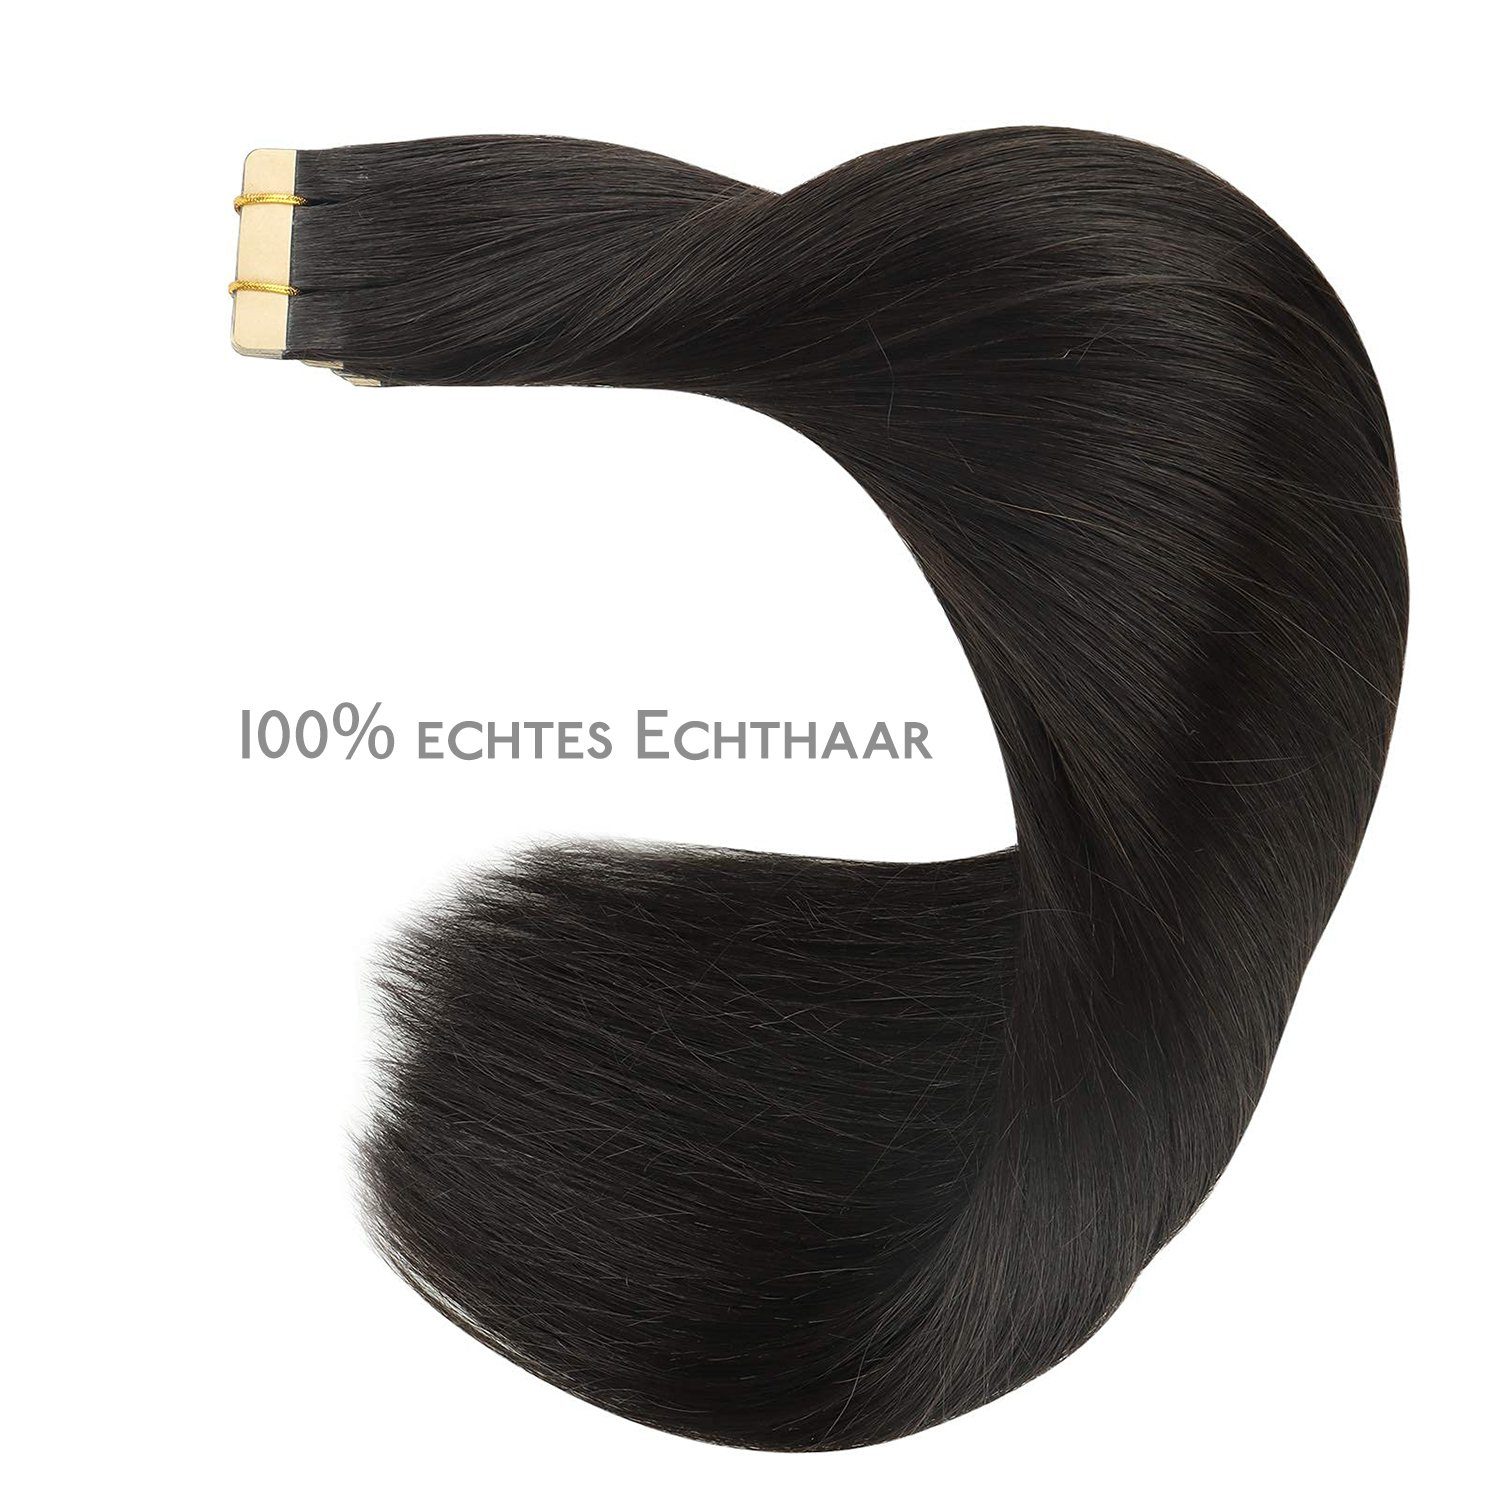 Echthaarverlängerungen, 20 Stück im Echthaar-Extension Wennalife Klebeband Haar, nahtlos glatt